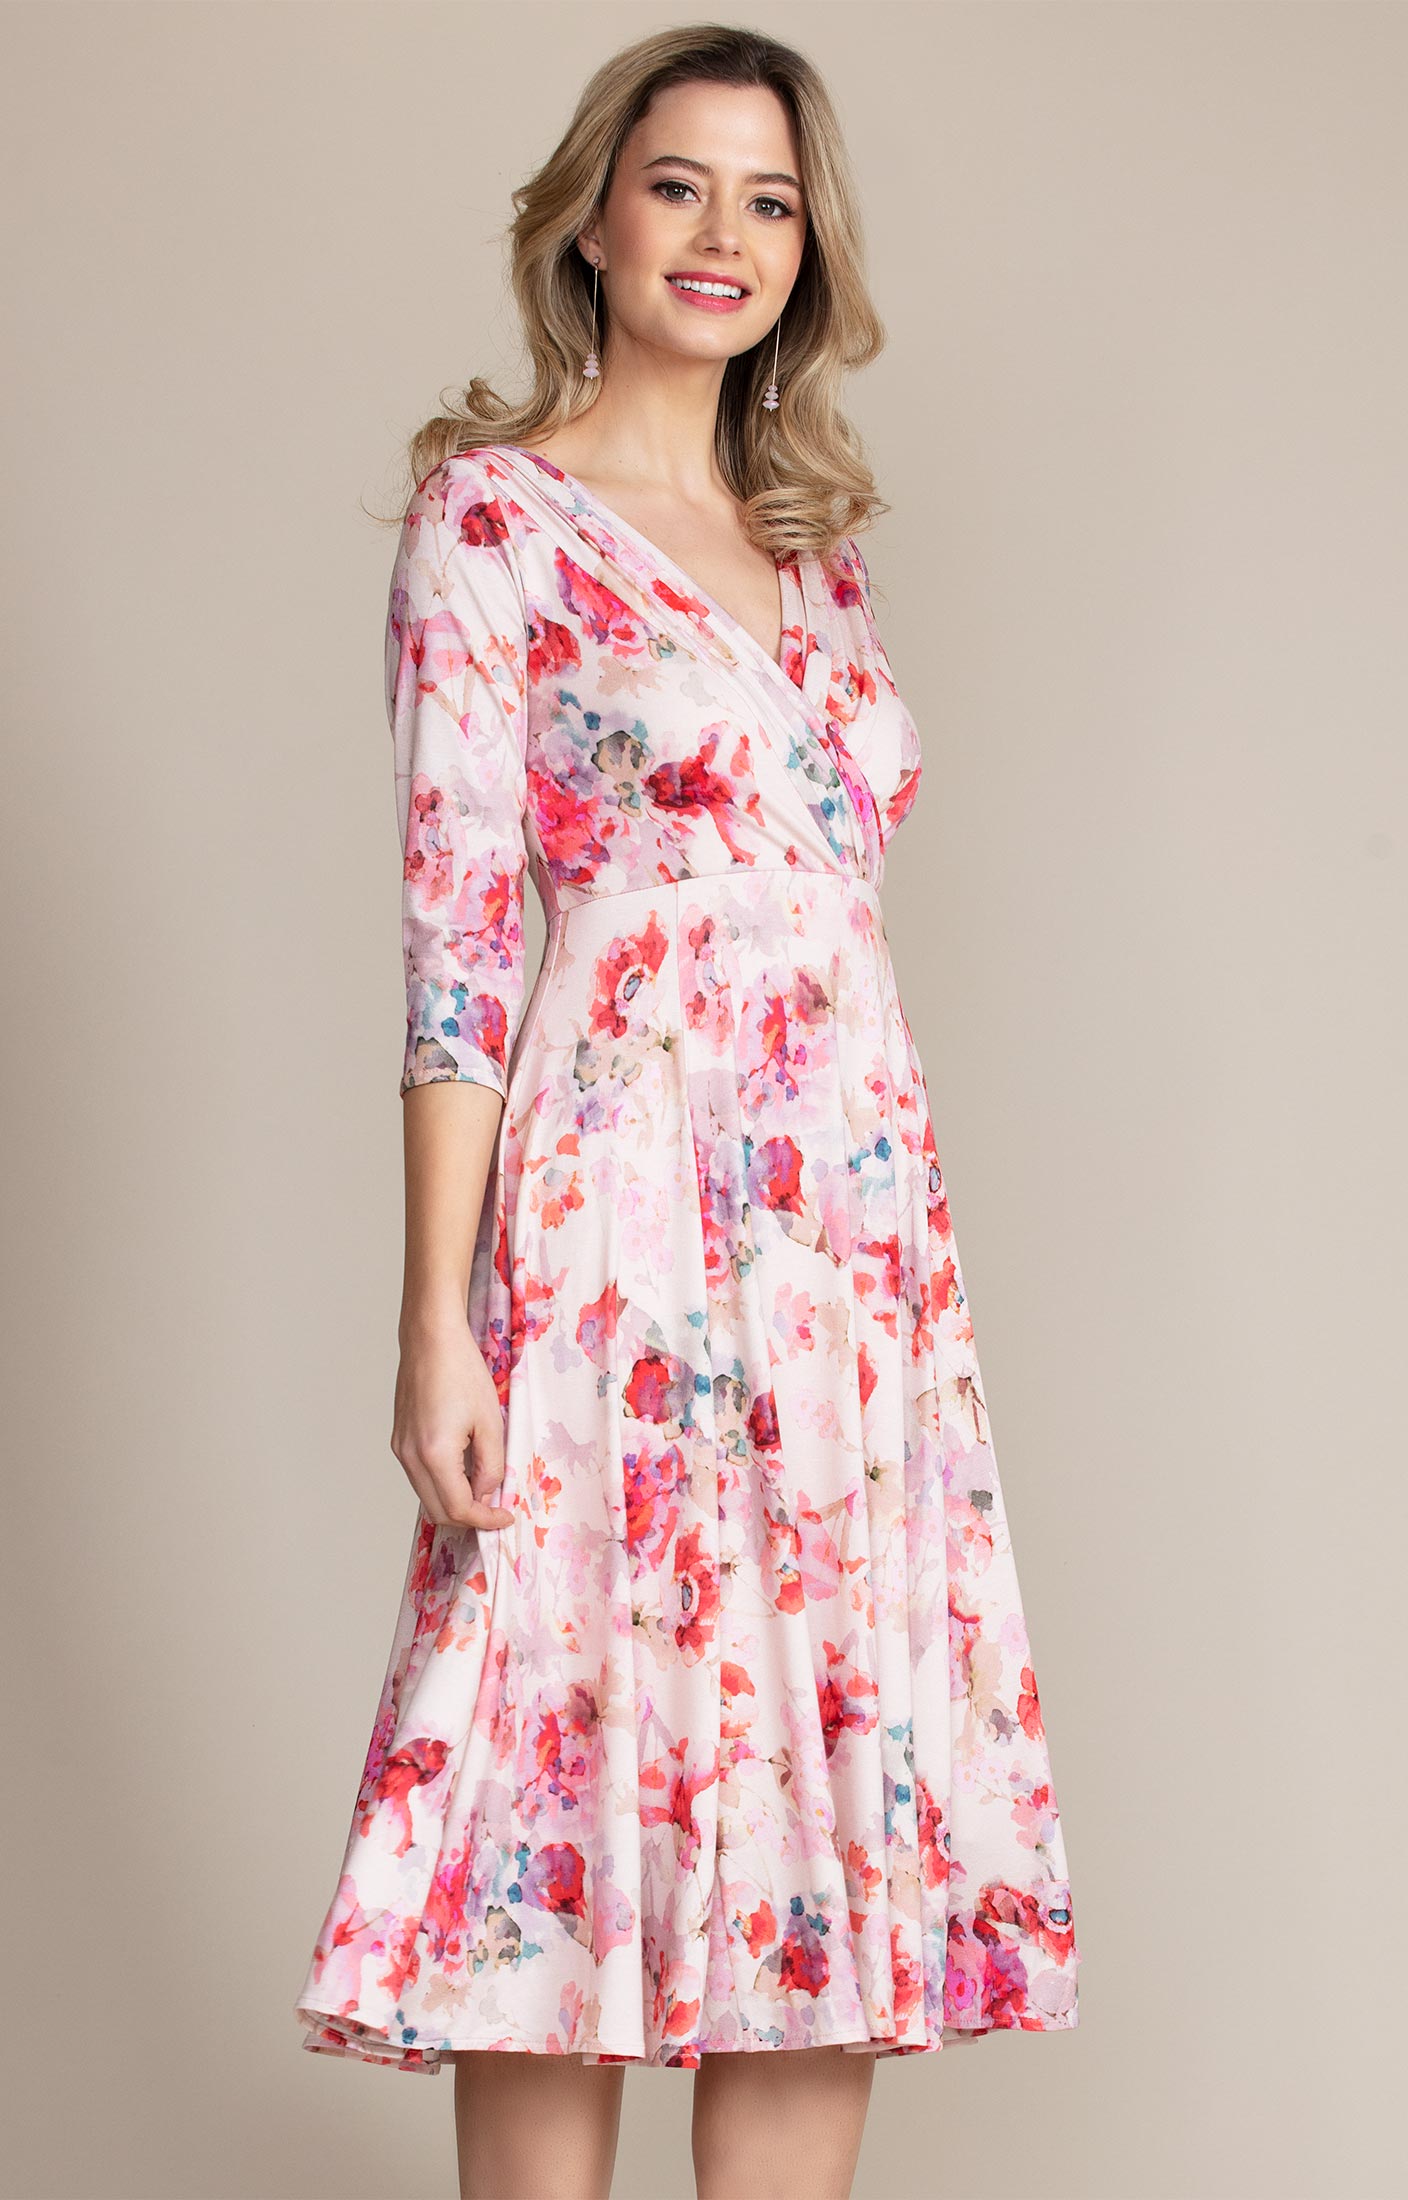 rose print dress